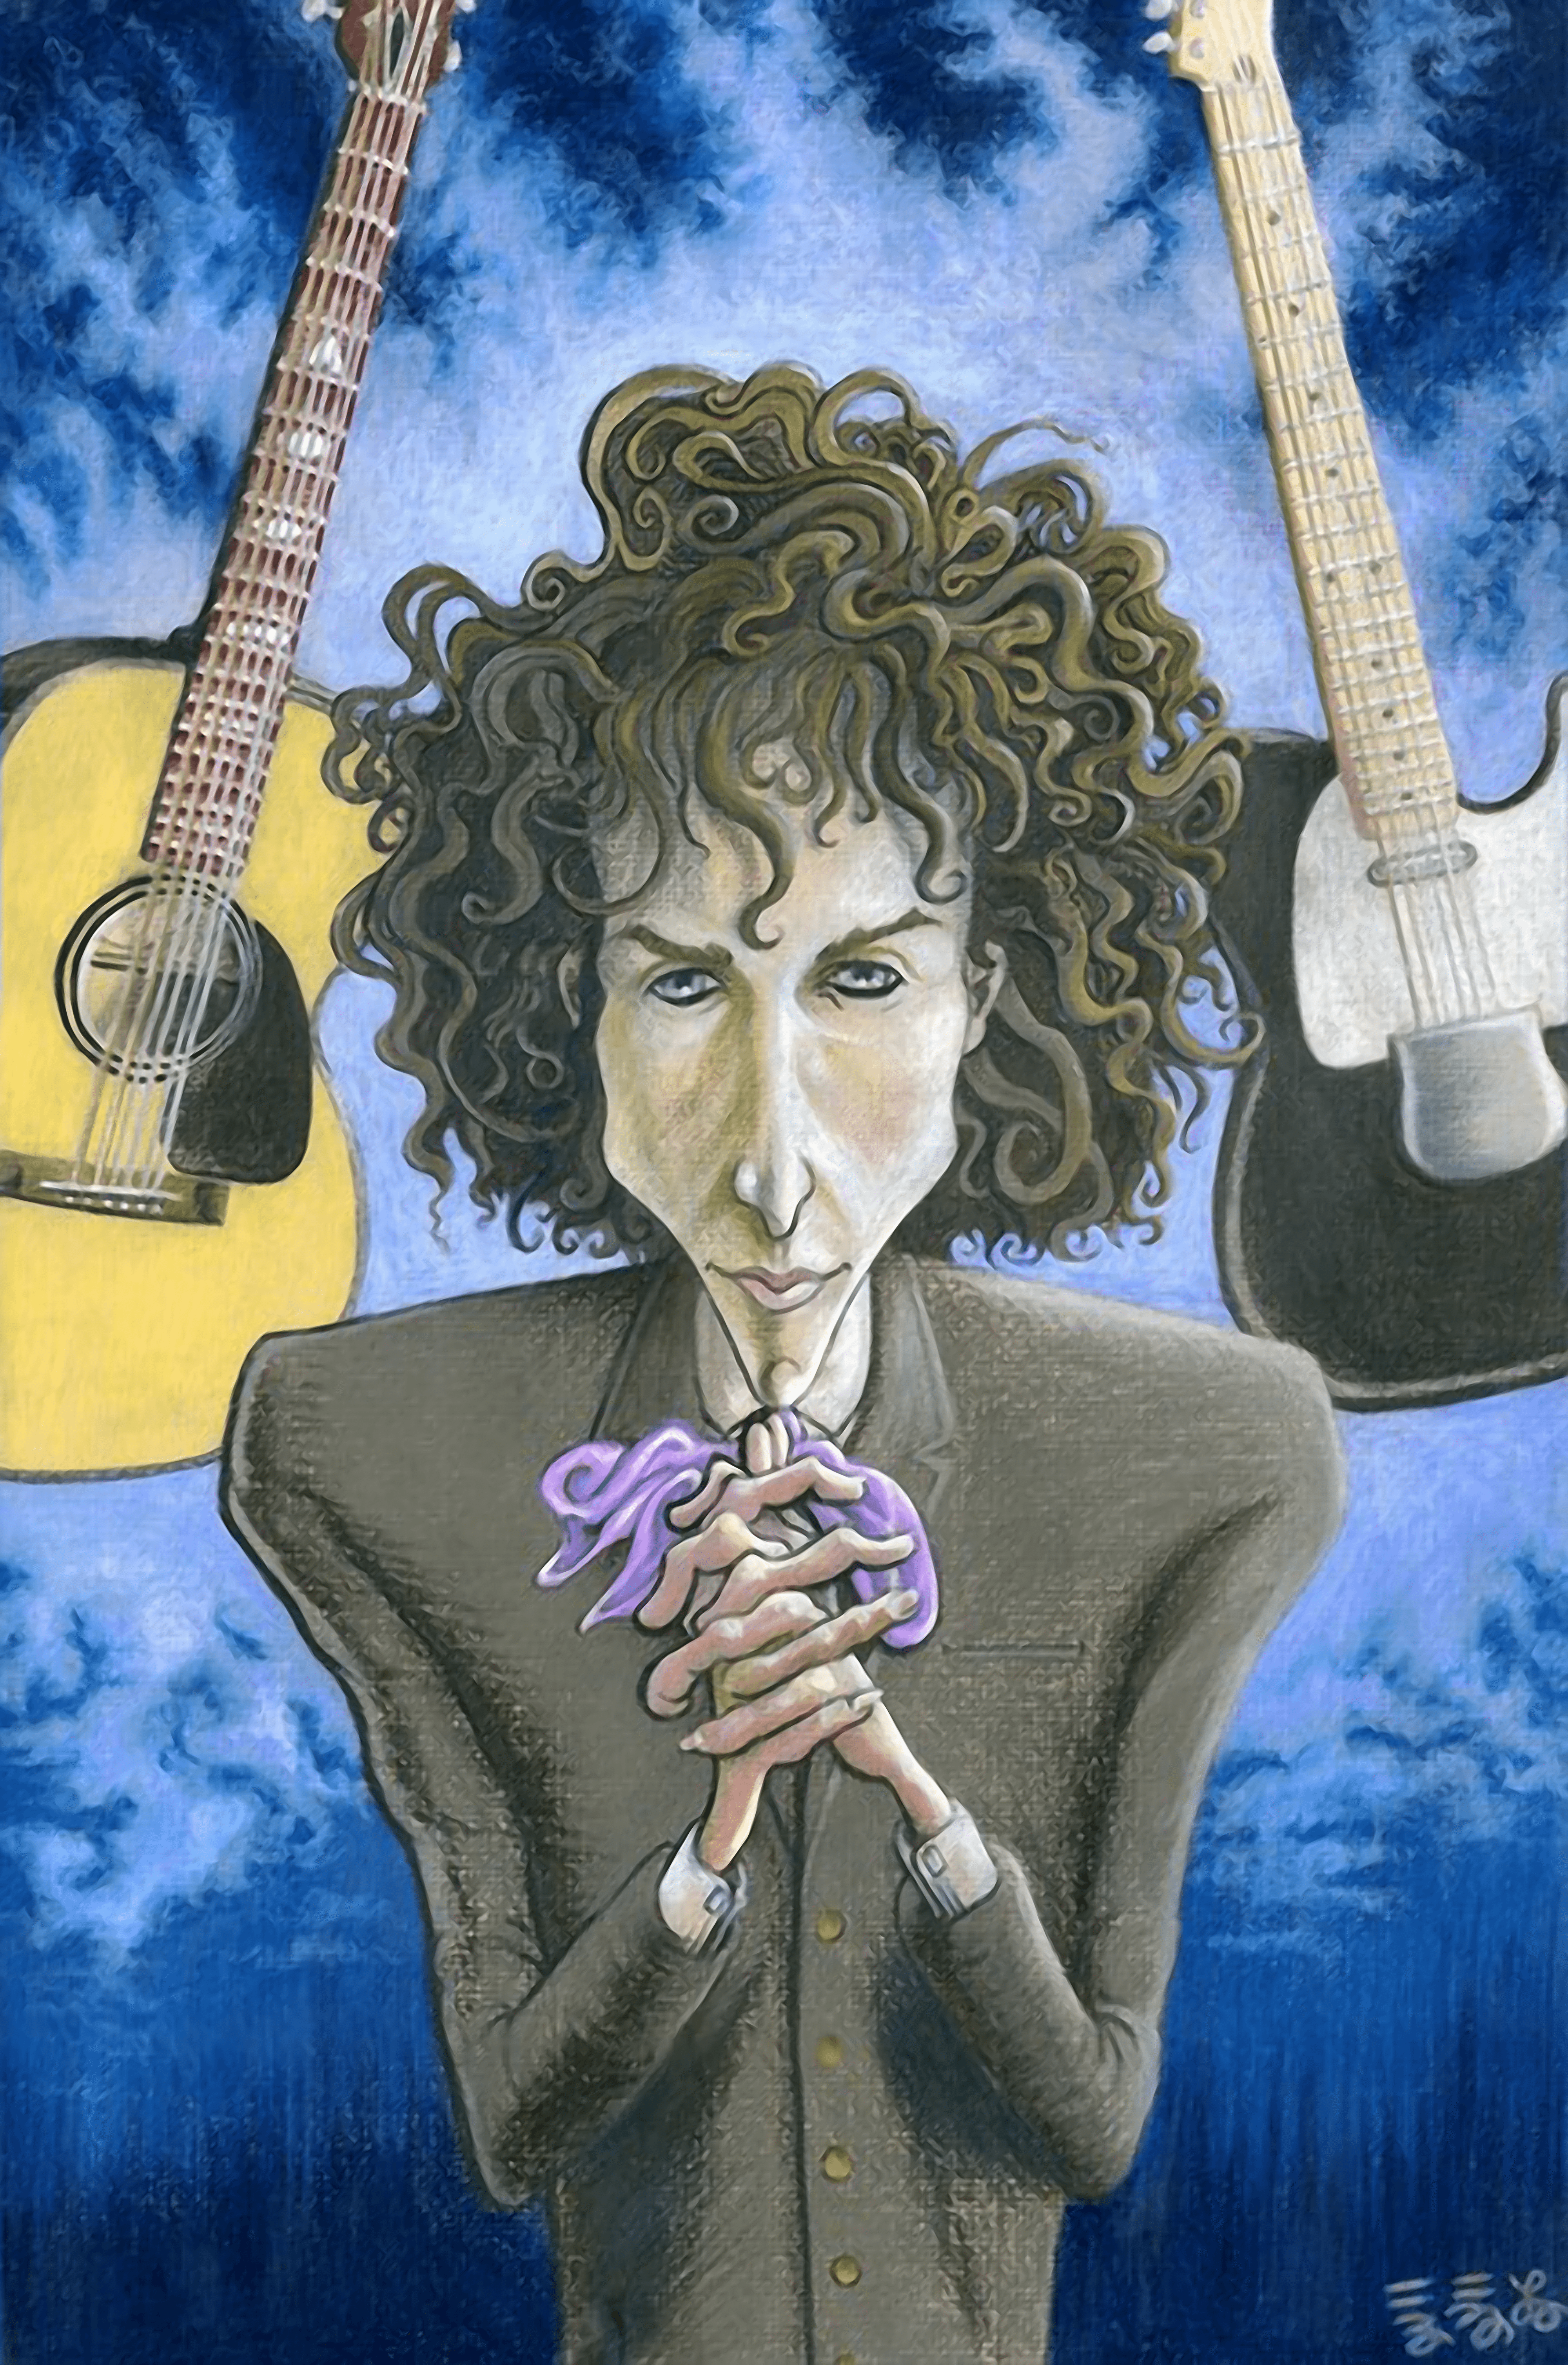 Bob Dylan's Conundrum by EBENLO